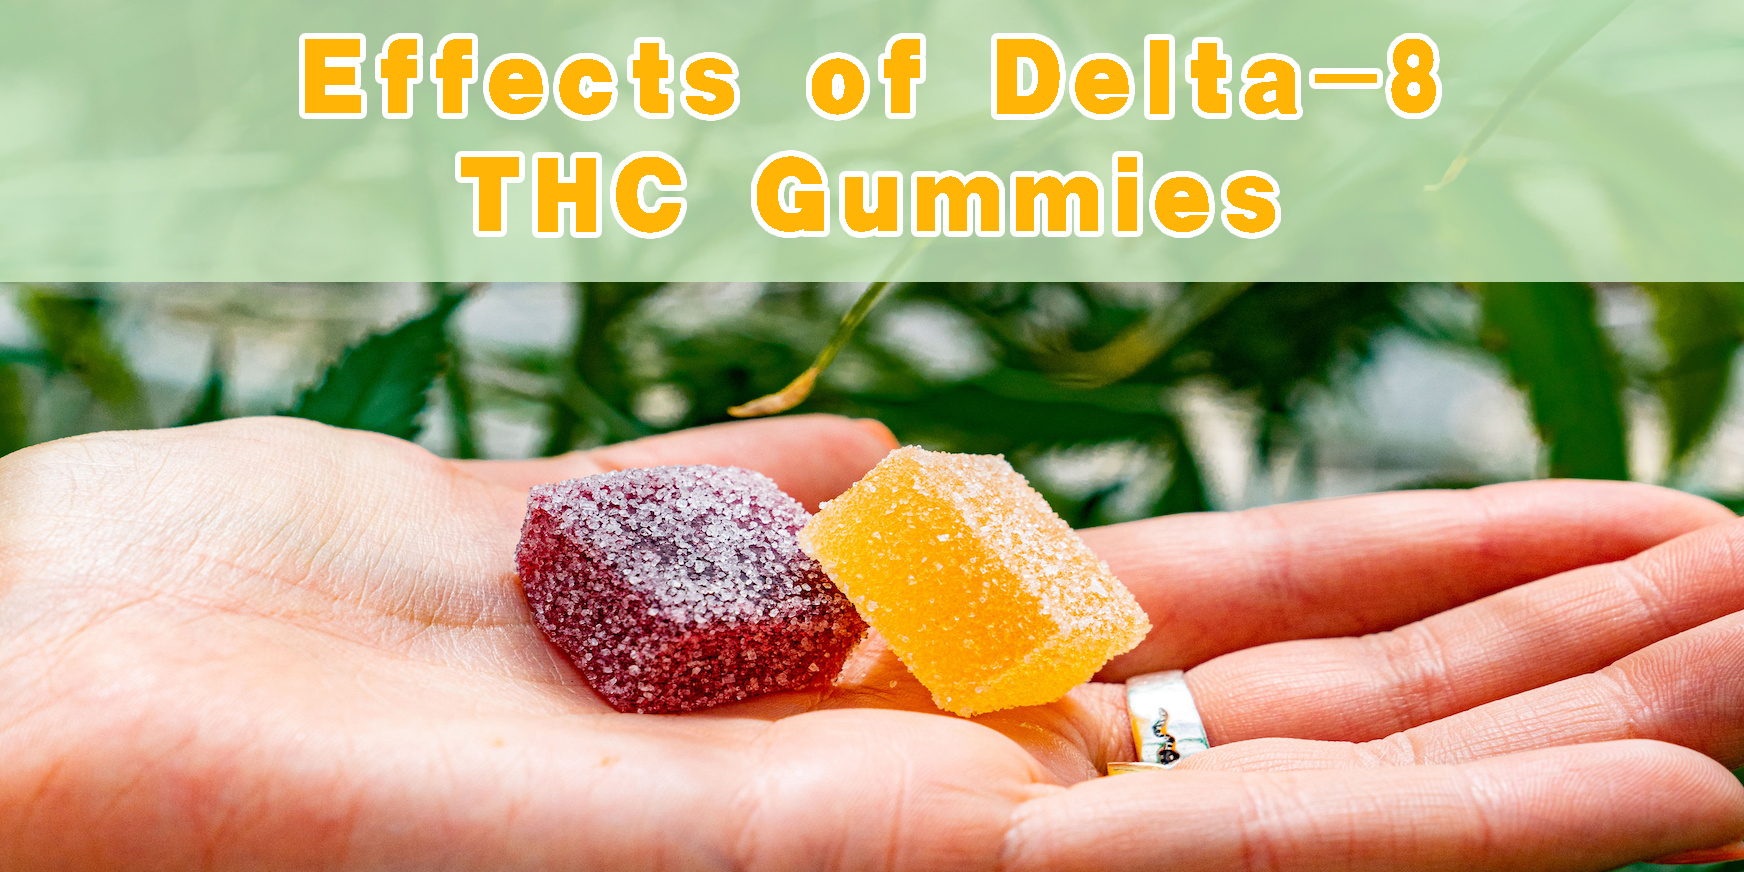 Effects of Delta-8 THC Gummies